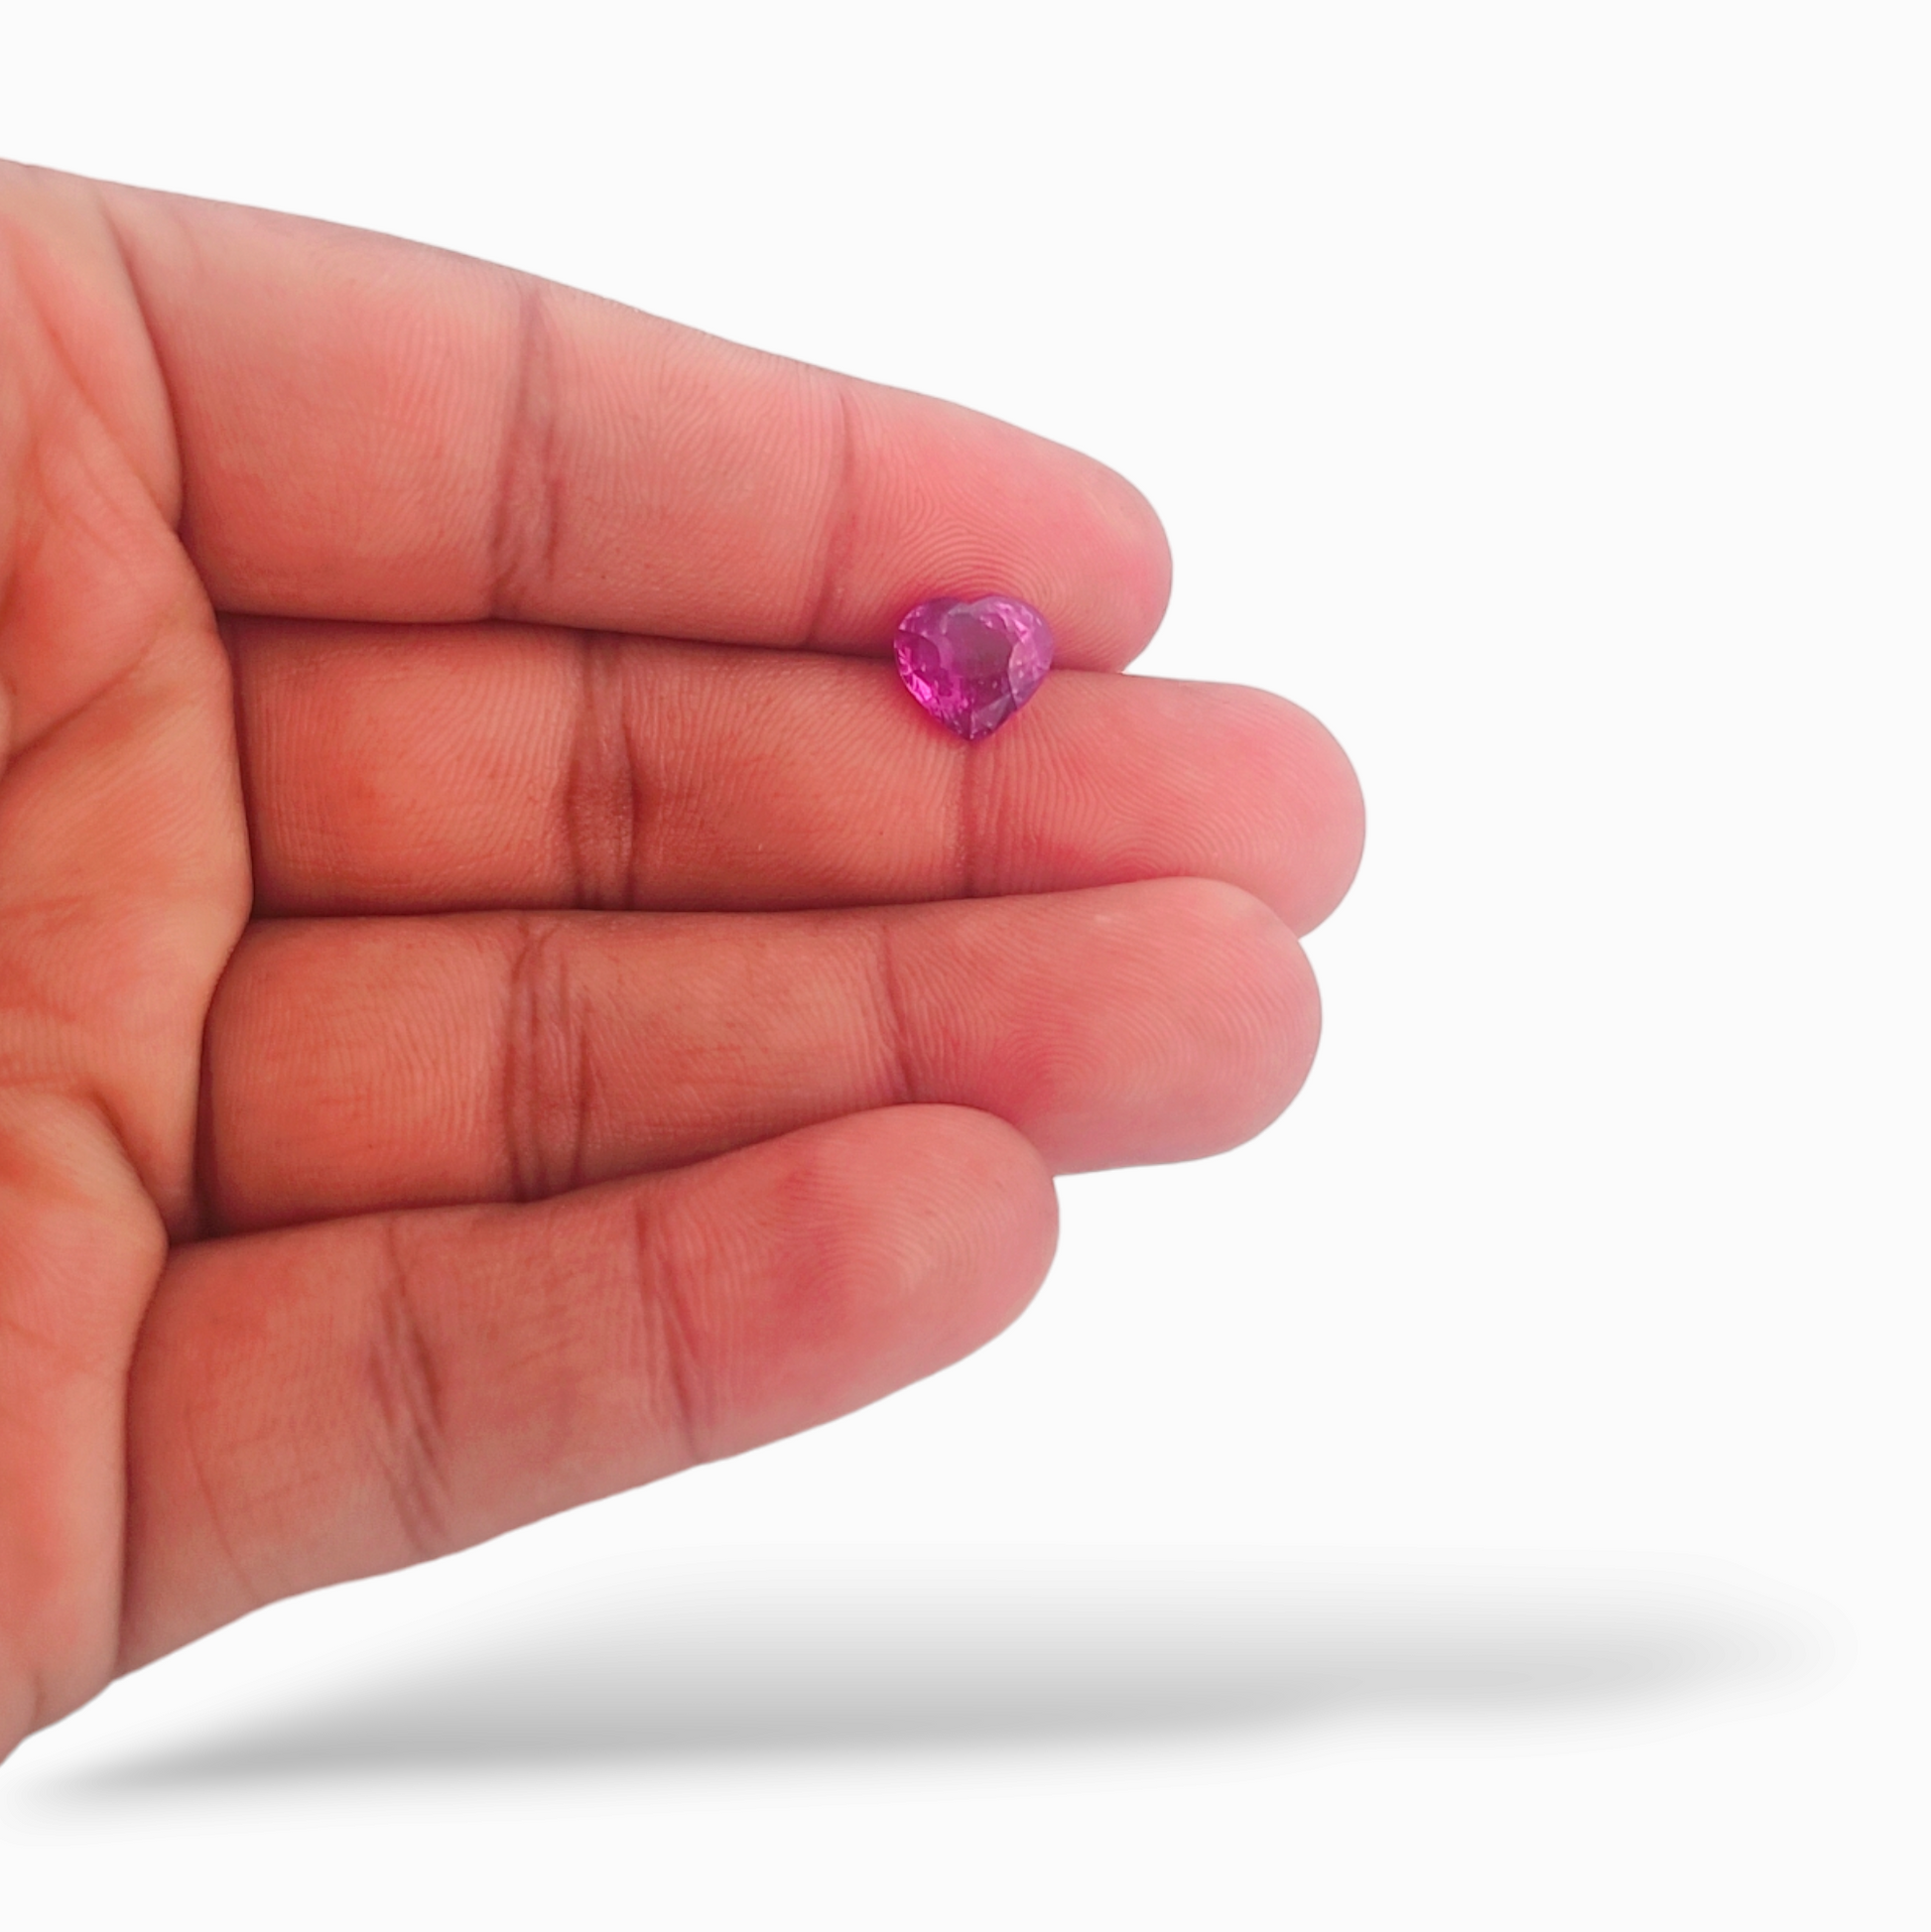 Pink Sapphire Stone Srilanka Heart 3.53 Carats